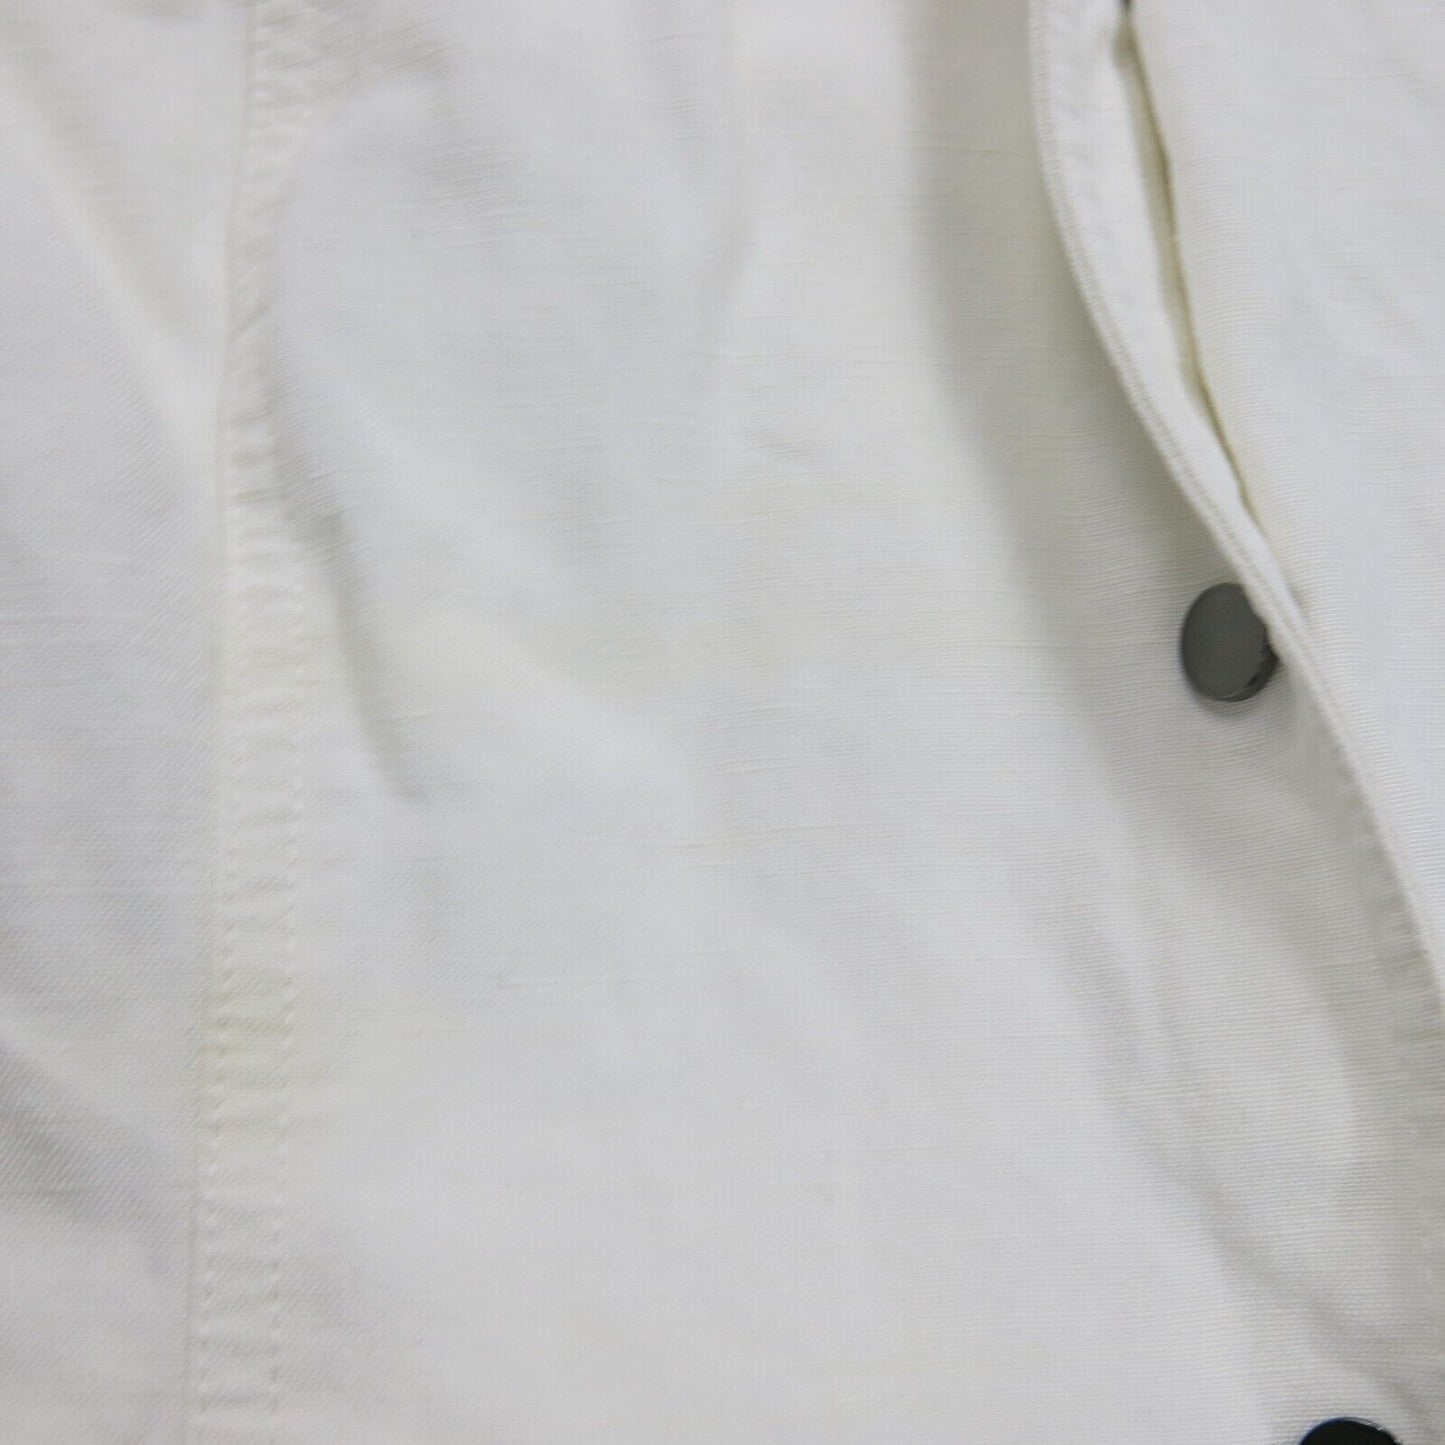 Tahari Womens Windbreaker Jacket Long Sleeves Mock Neck Button White Size 14